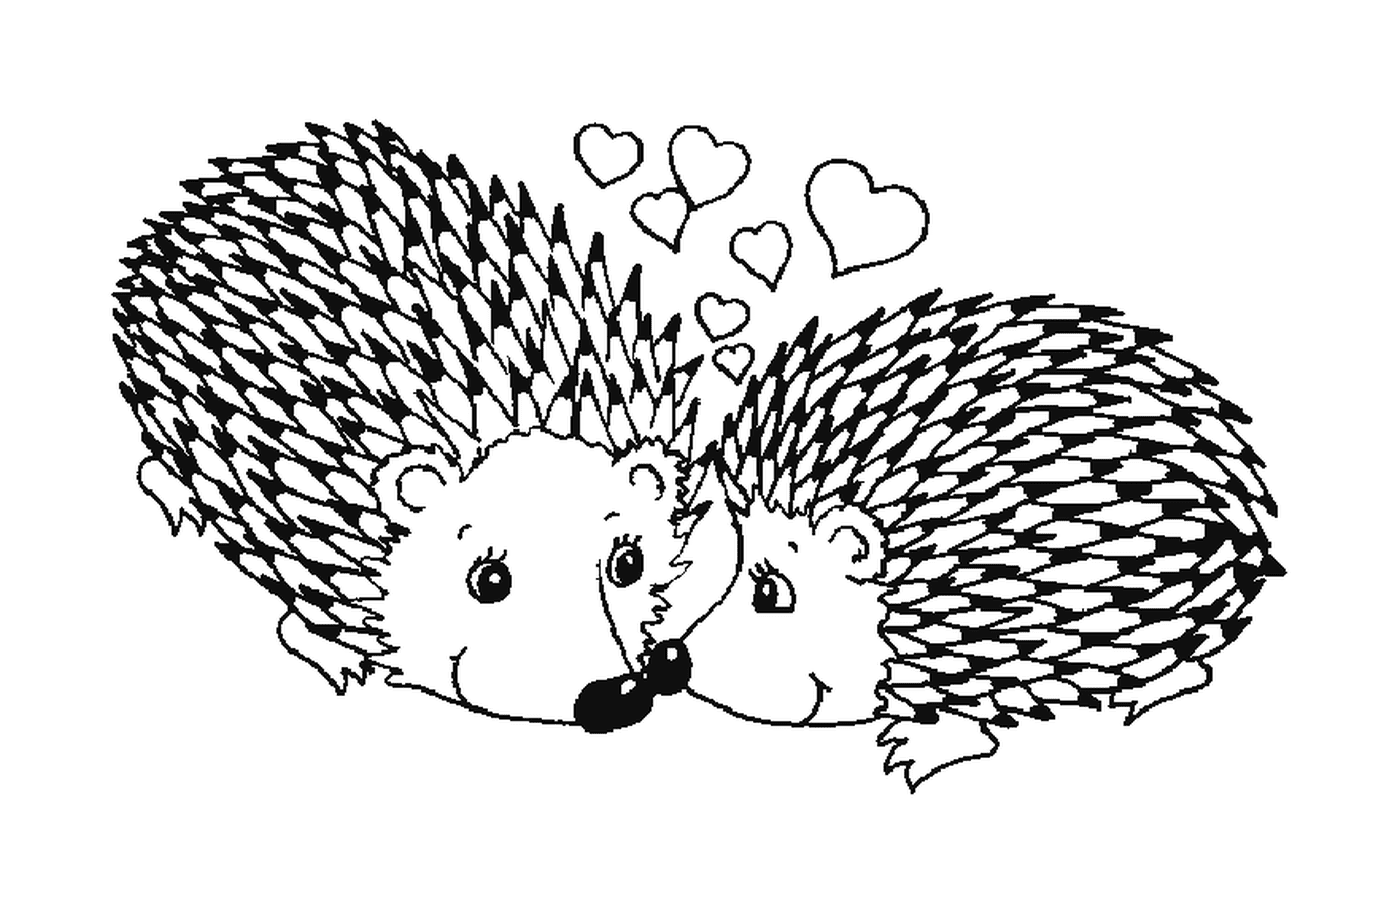  Two hedgehogs in love 